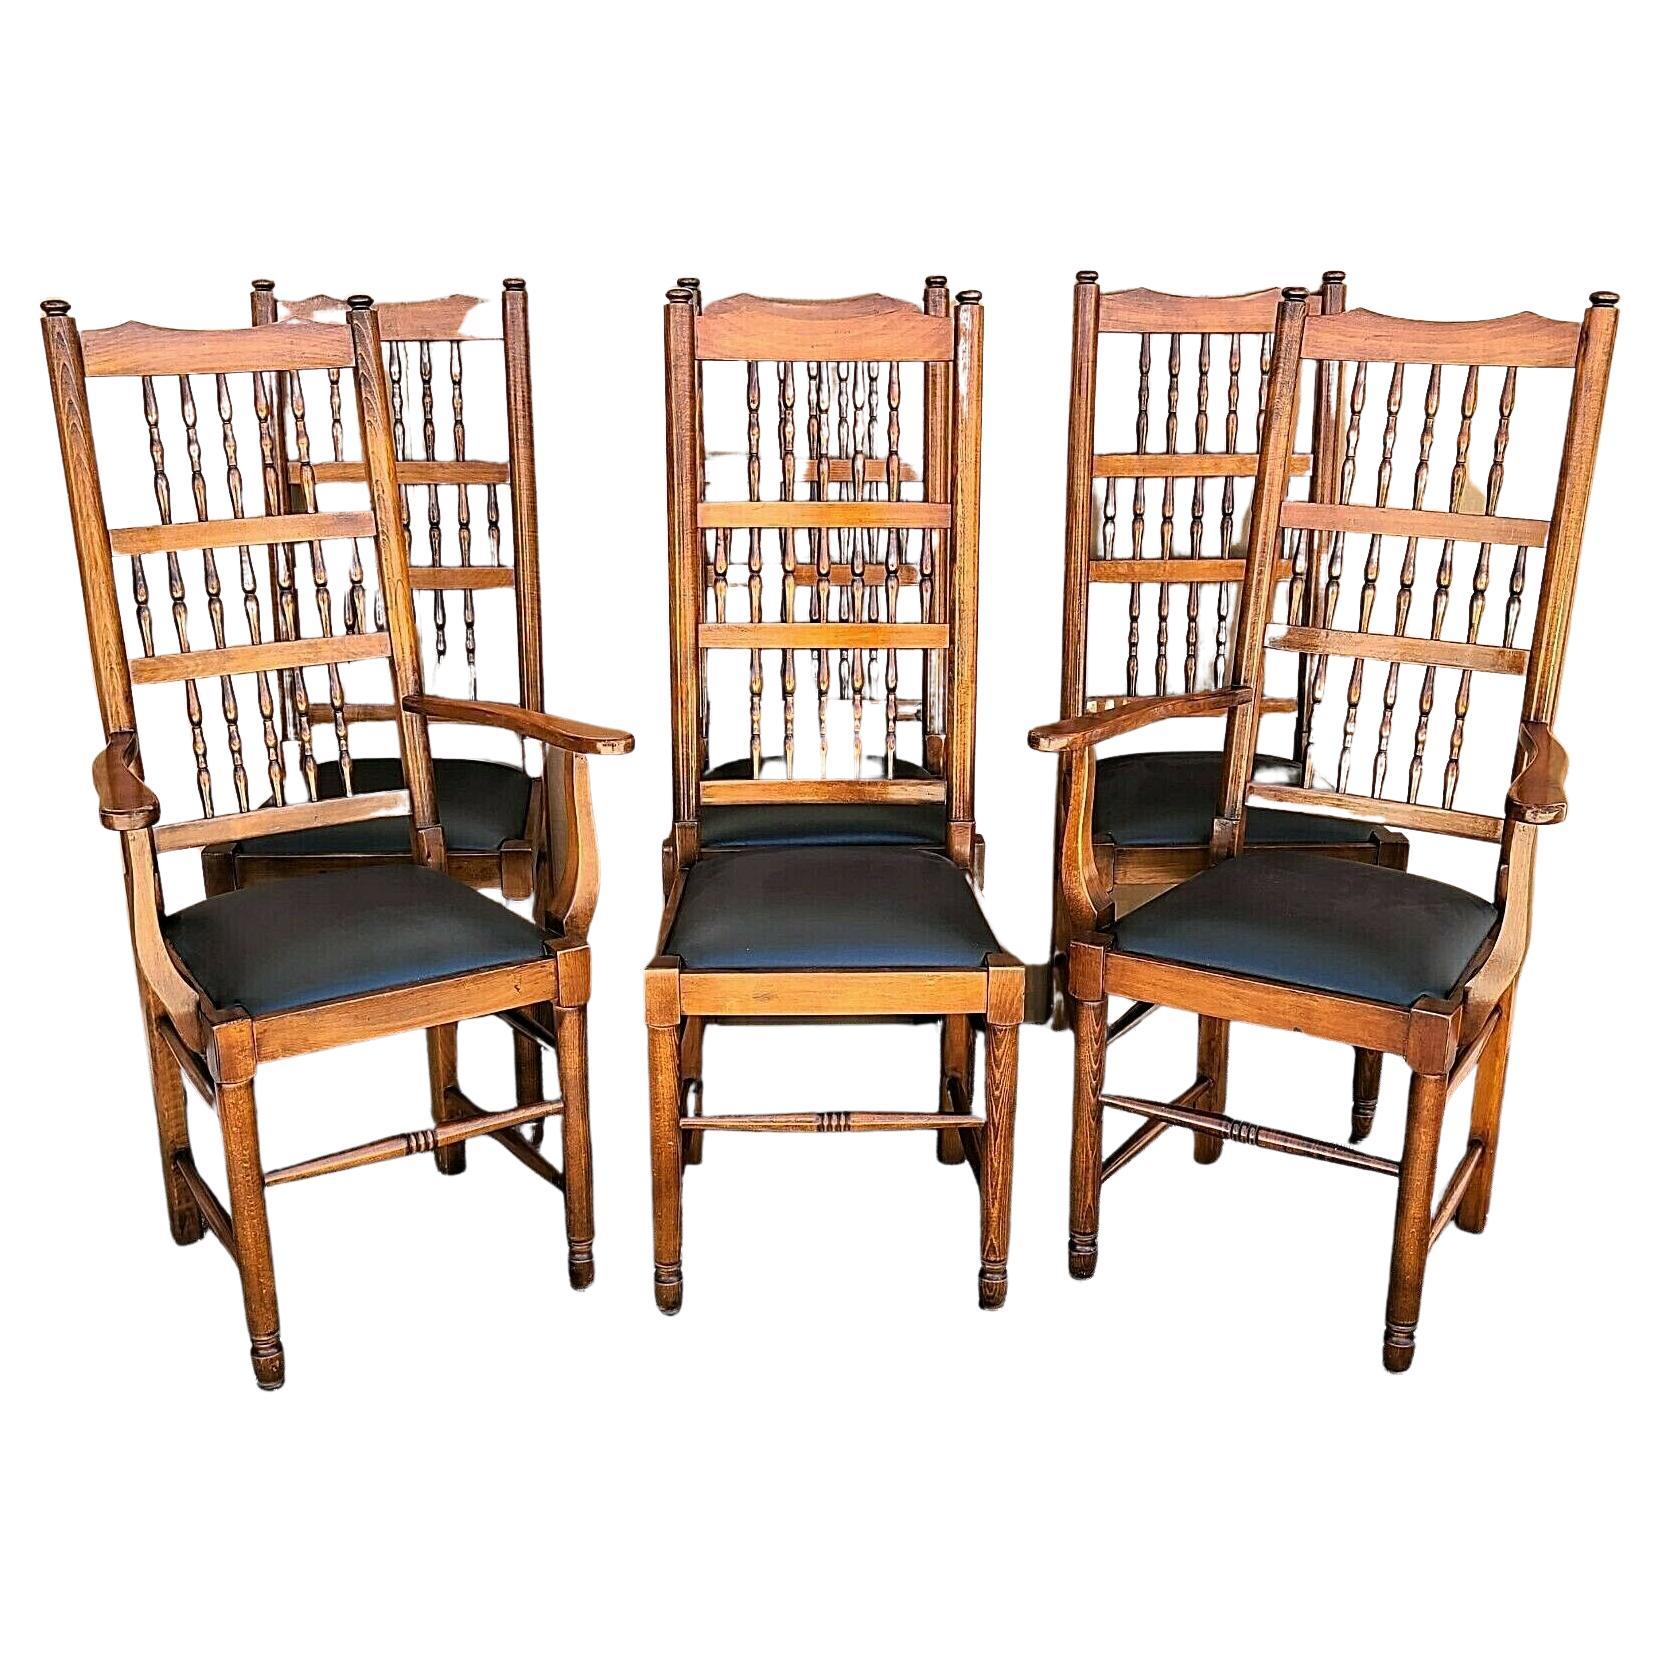 Lovato Luigi Tuscan Italian Dining Chairs, Set of 6 For Sale